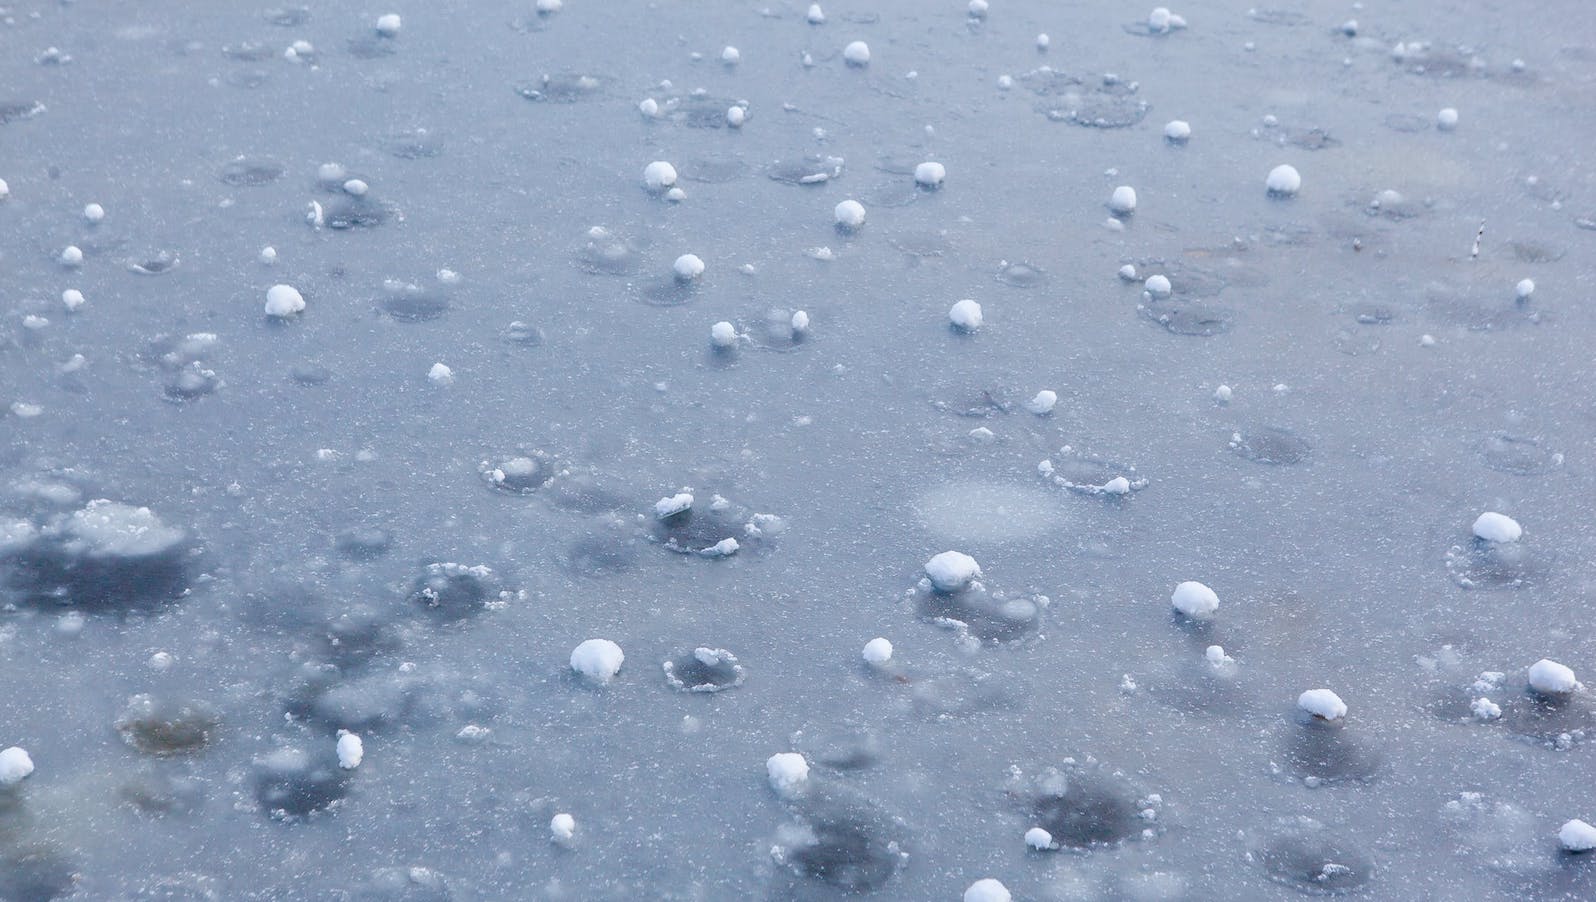 Hail Balls After Heavy Rain Lying on Ice